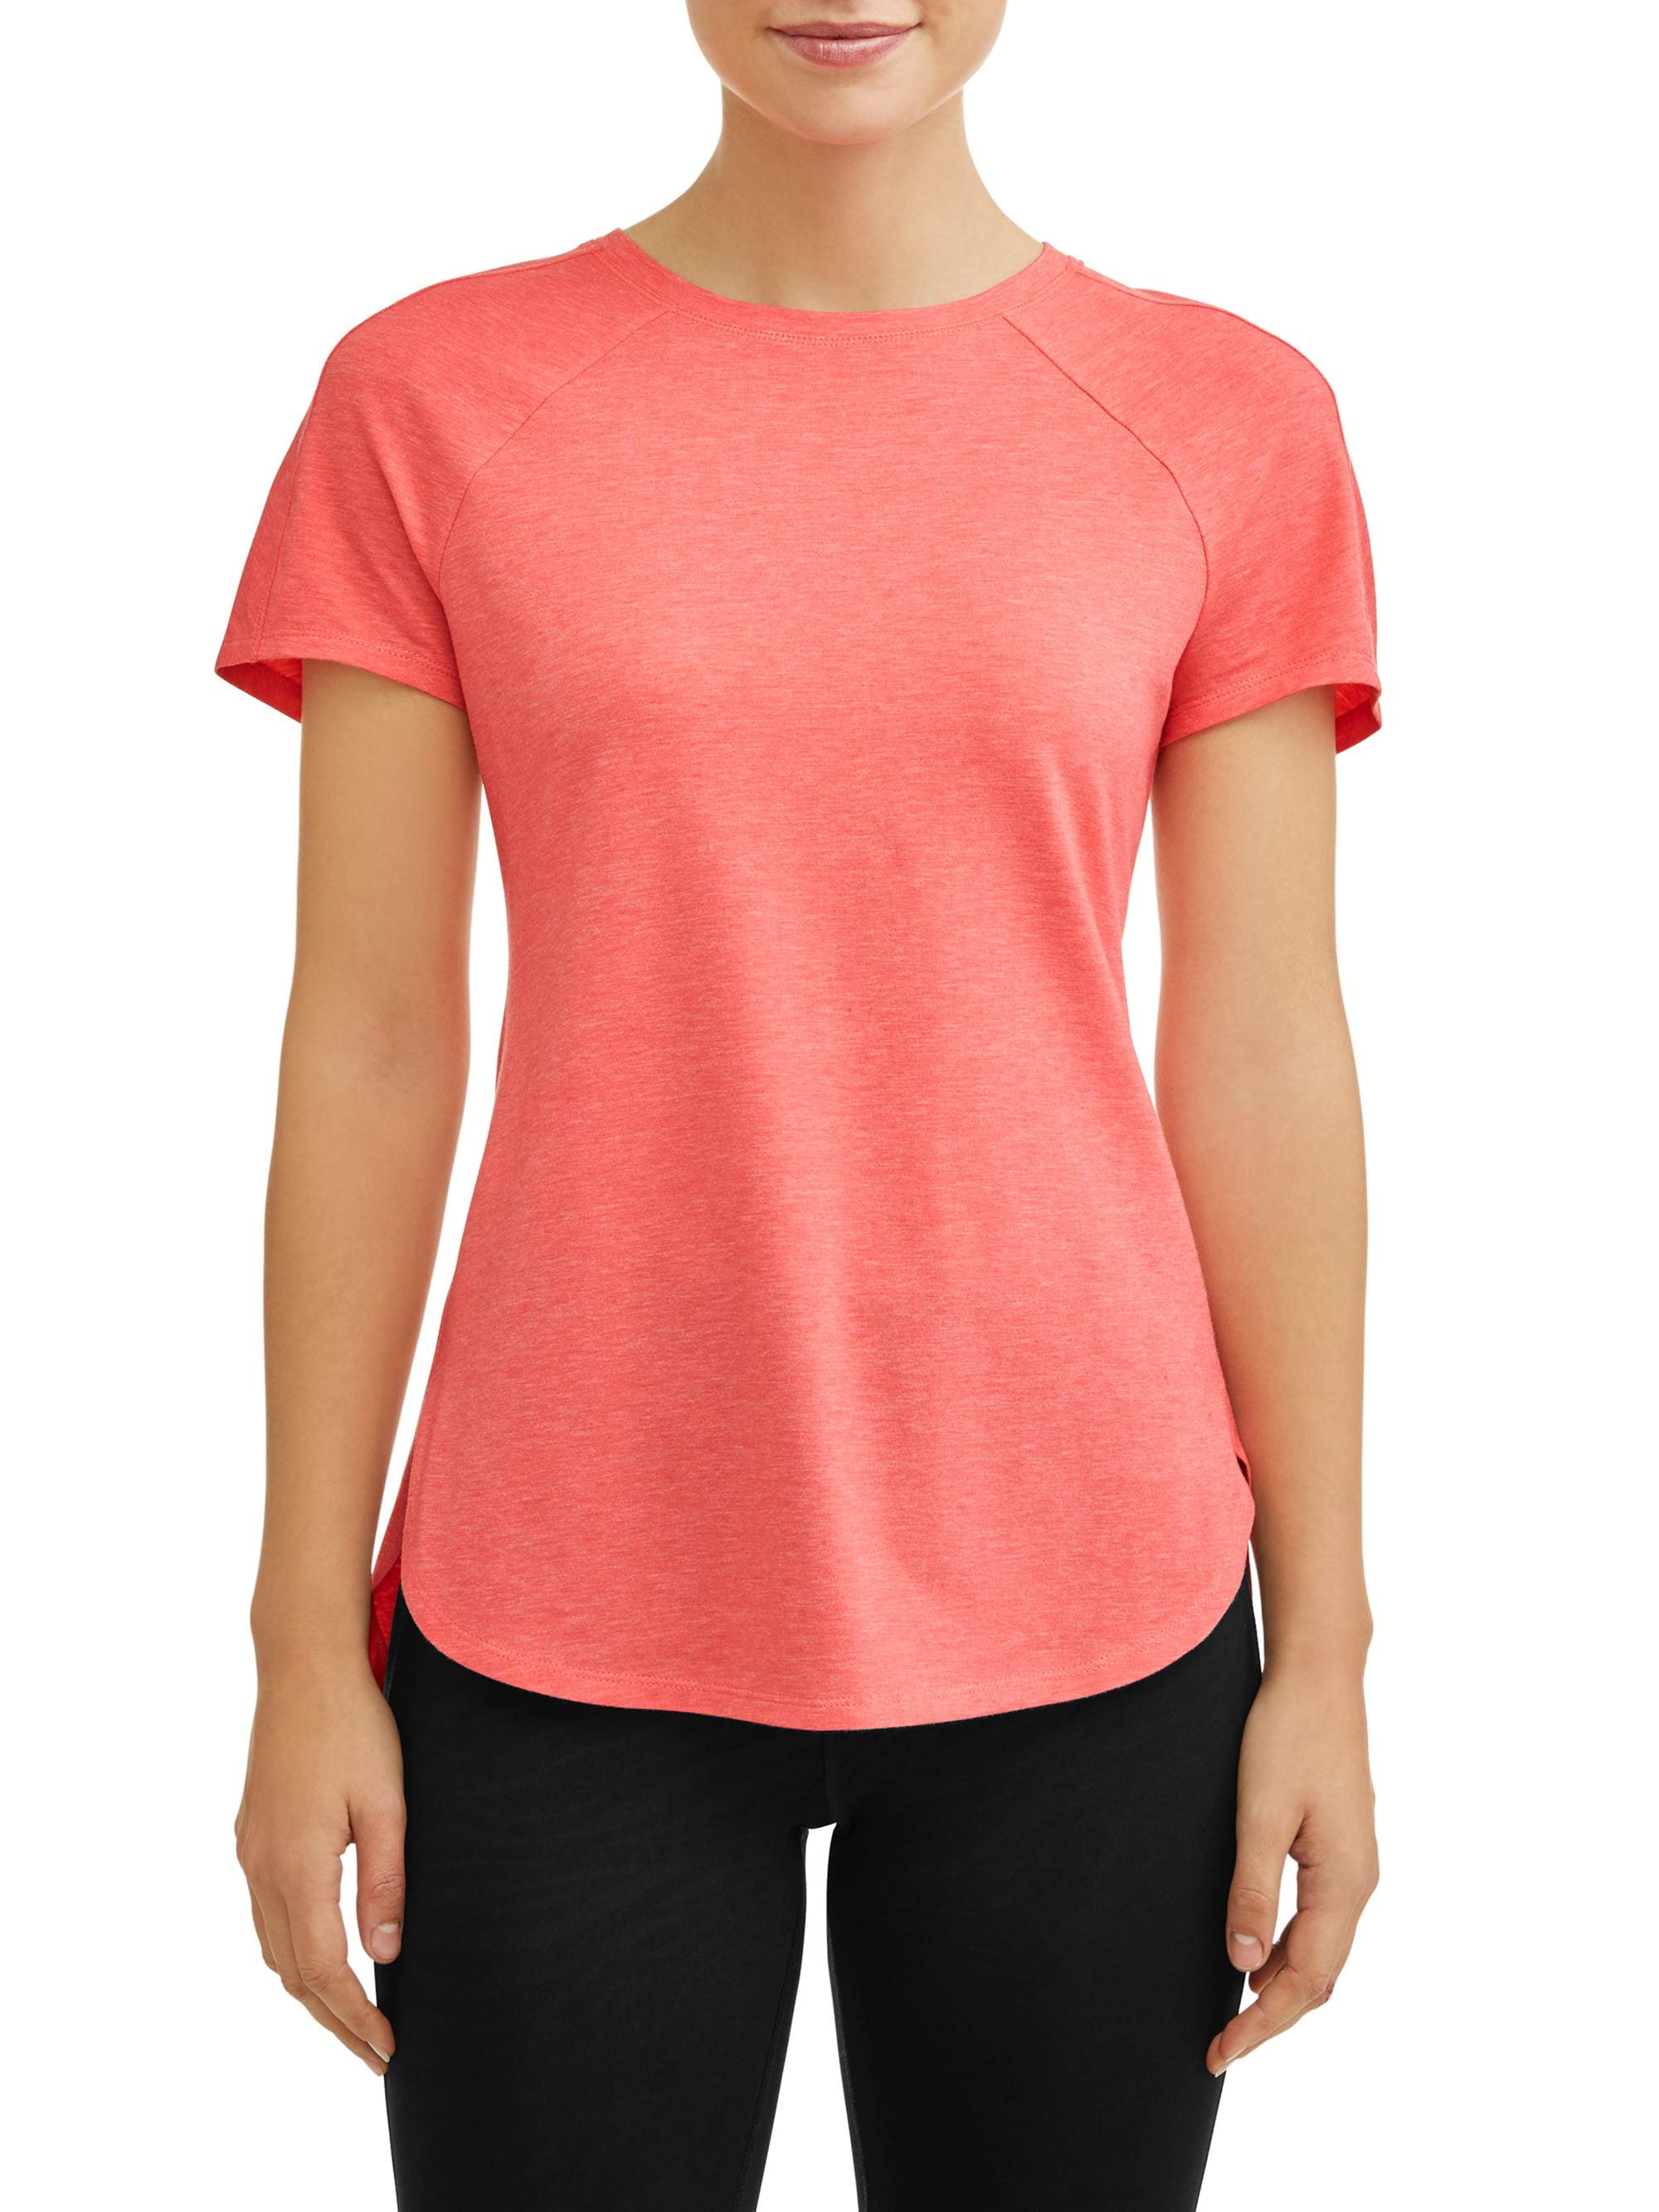 Avia Women's Core Active Short Sleeve Performance T-Shirt - Walmart.com